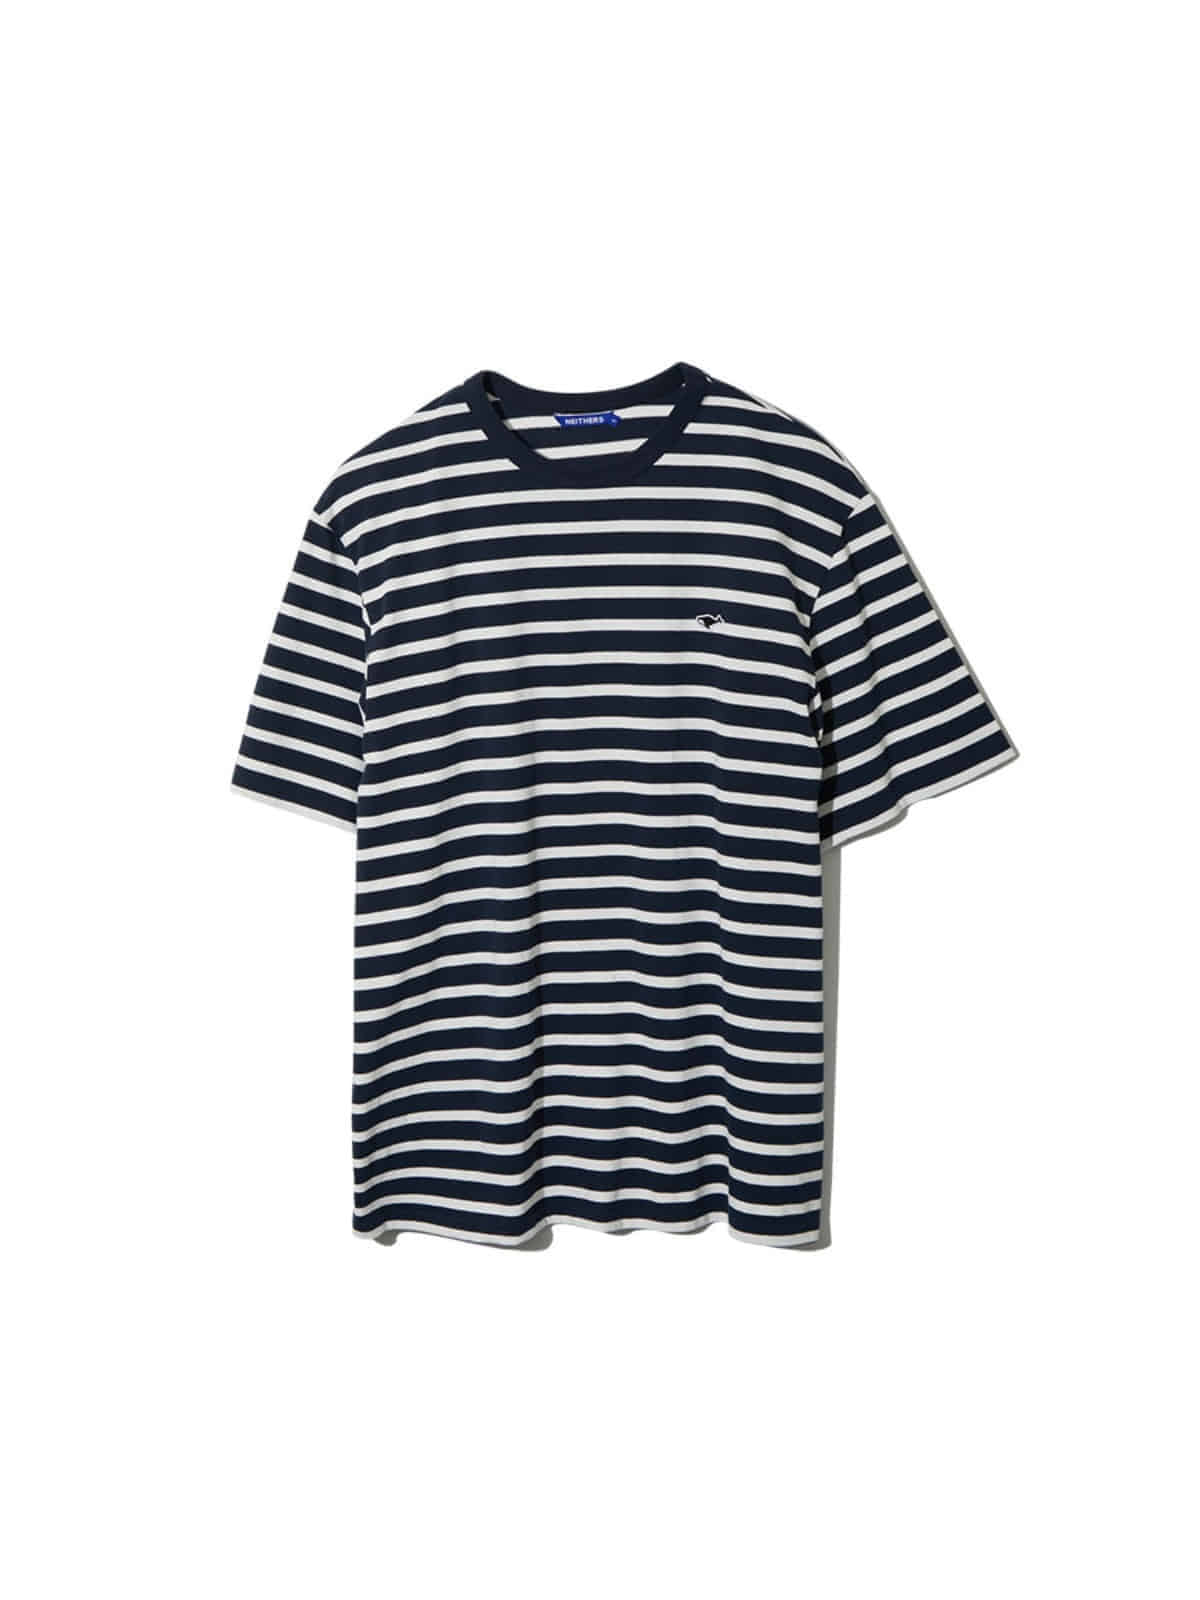 Basic Stripe S/S T-Shirt (Navy)